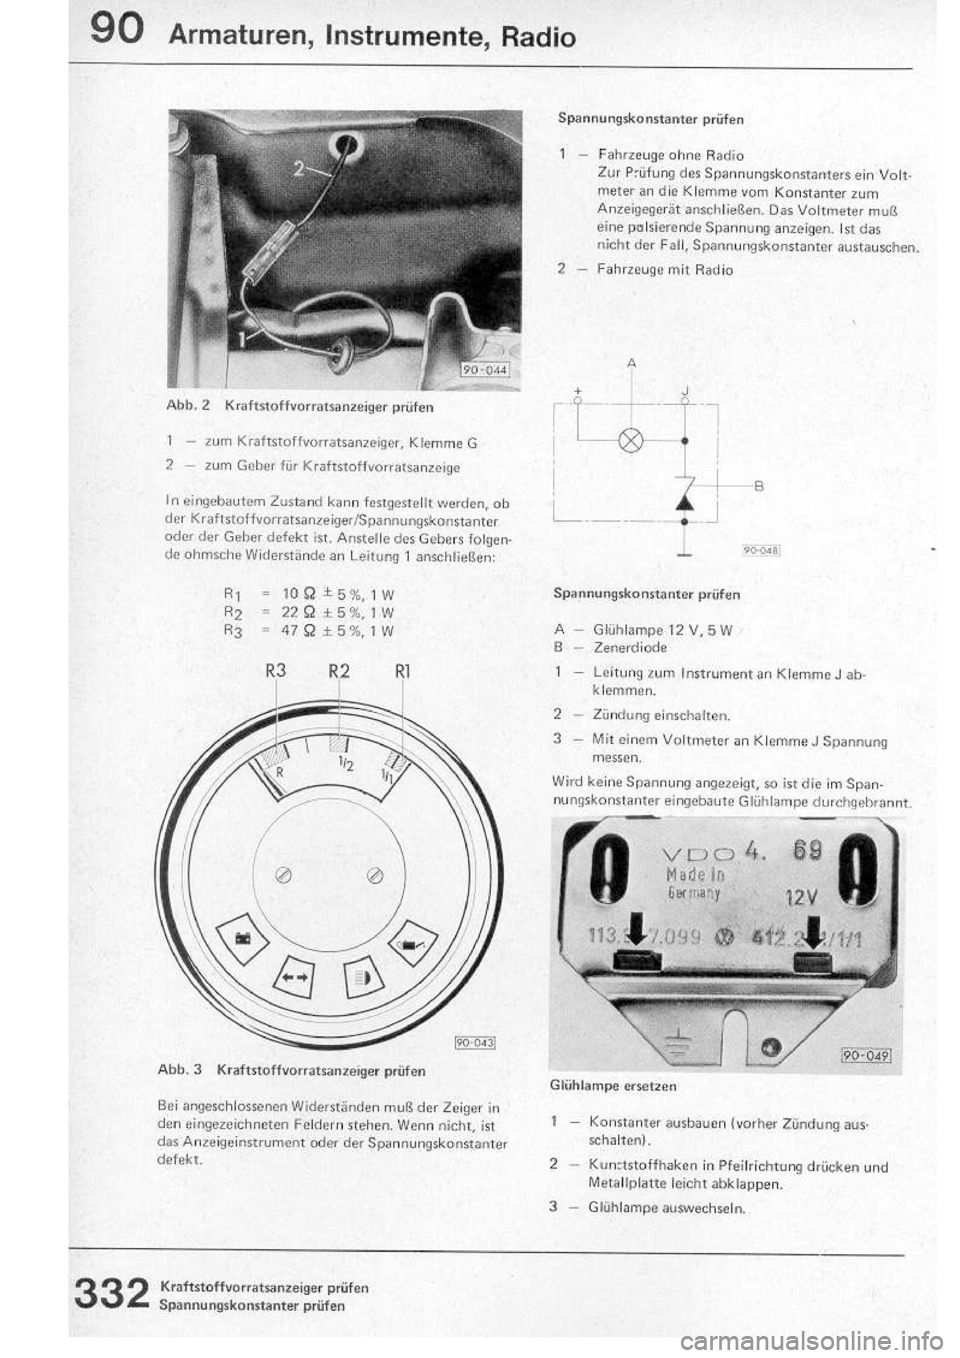 VOLKSWAGEN T2 1975  Repair Manual 
http://vwbus.dyndns.org/bulli/michaelk/vw_bus_d/rlf/10/332.jpg 